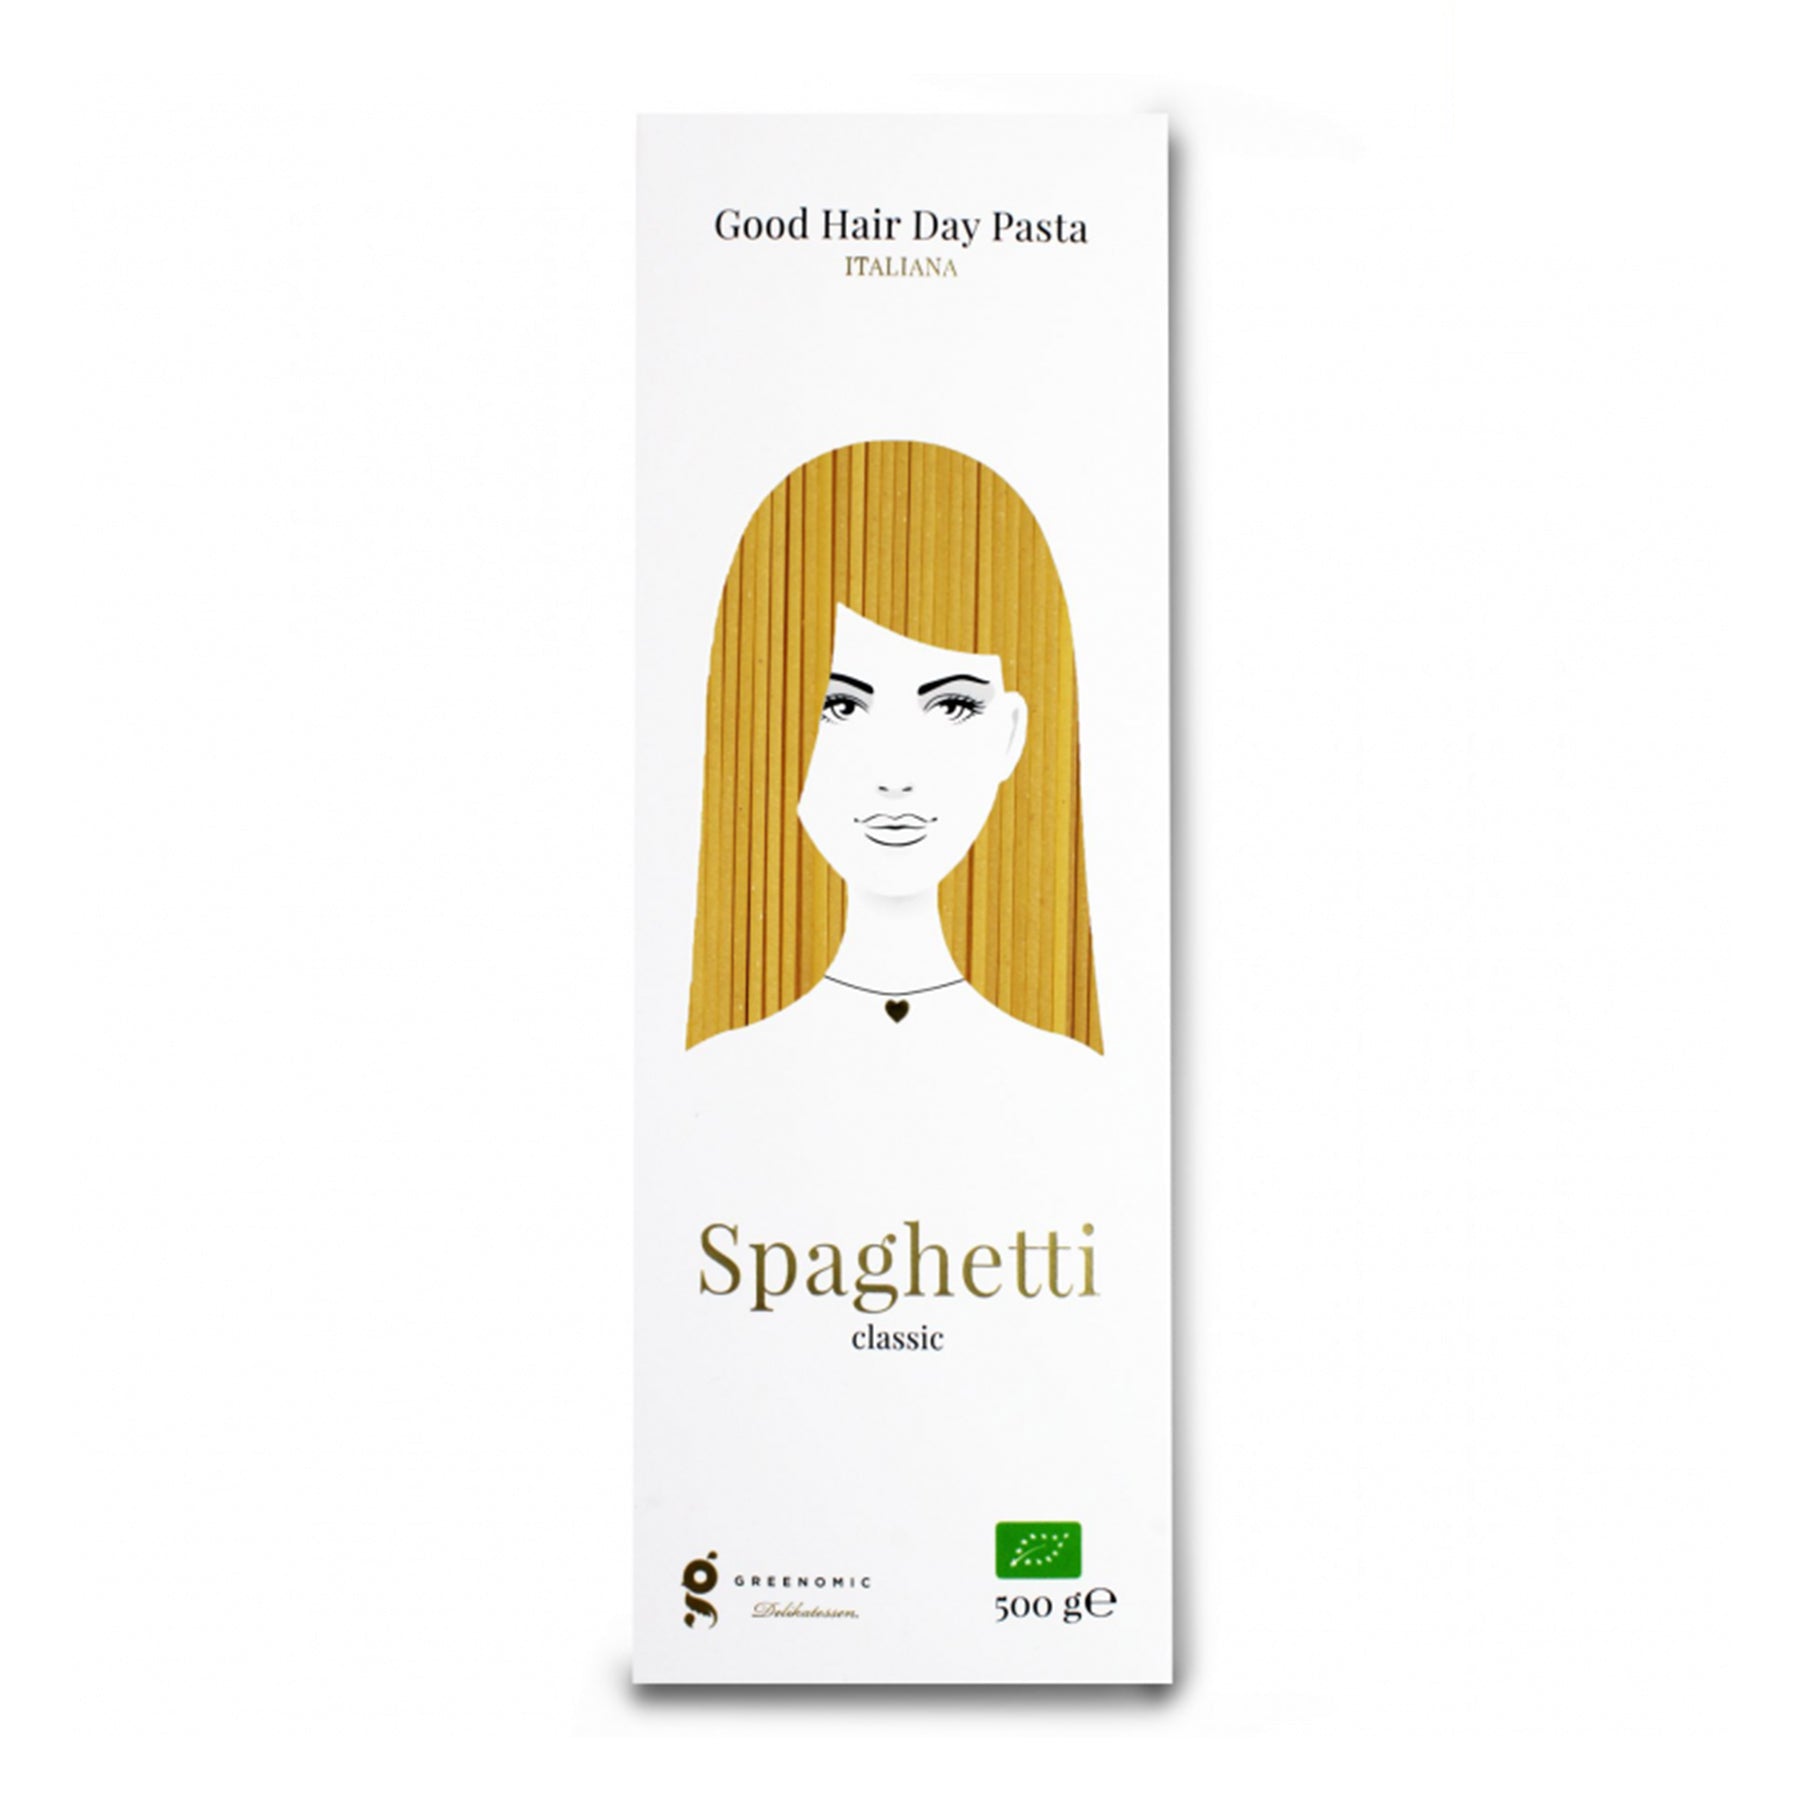 Spaghetti Classic BIO - Good Hair Day Pasta